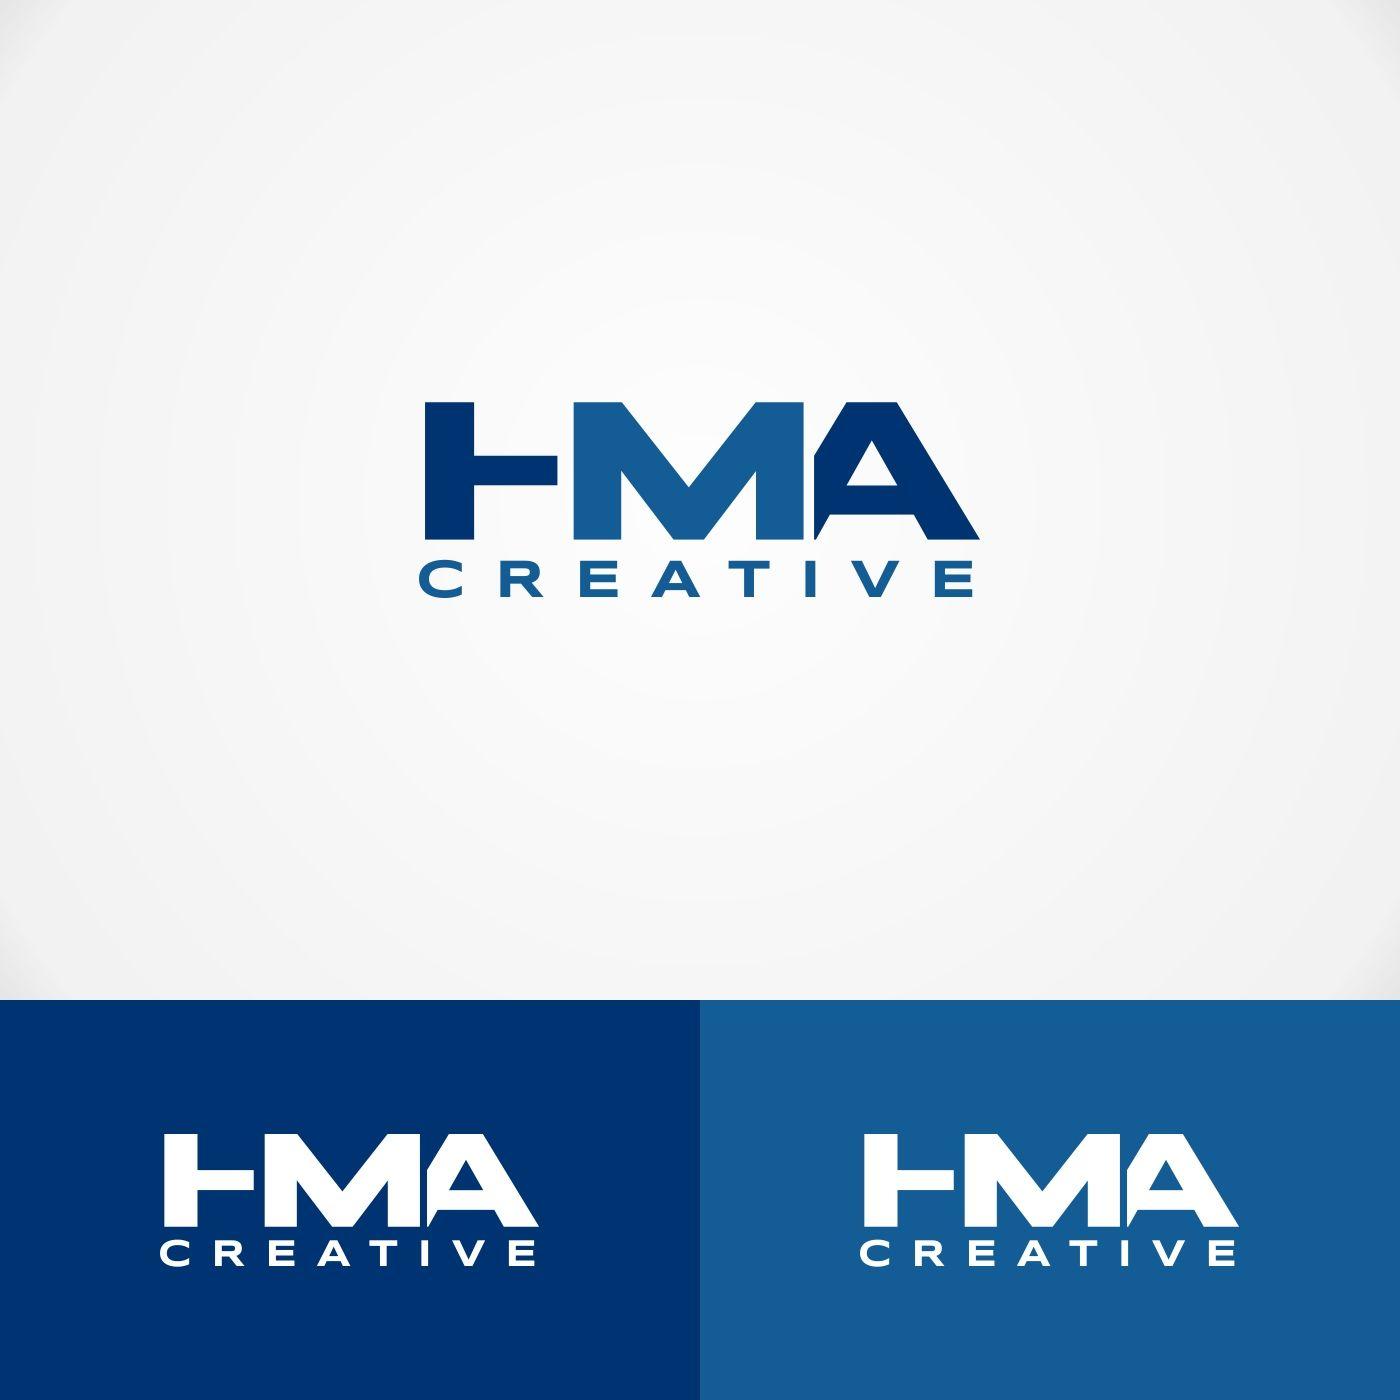 HMA Logo - Modern, Elegant, Promotional Product Logo Design for HMA Creative